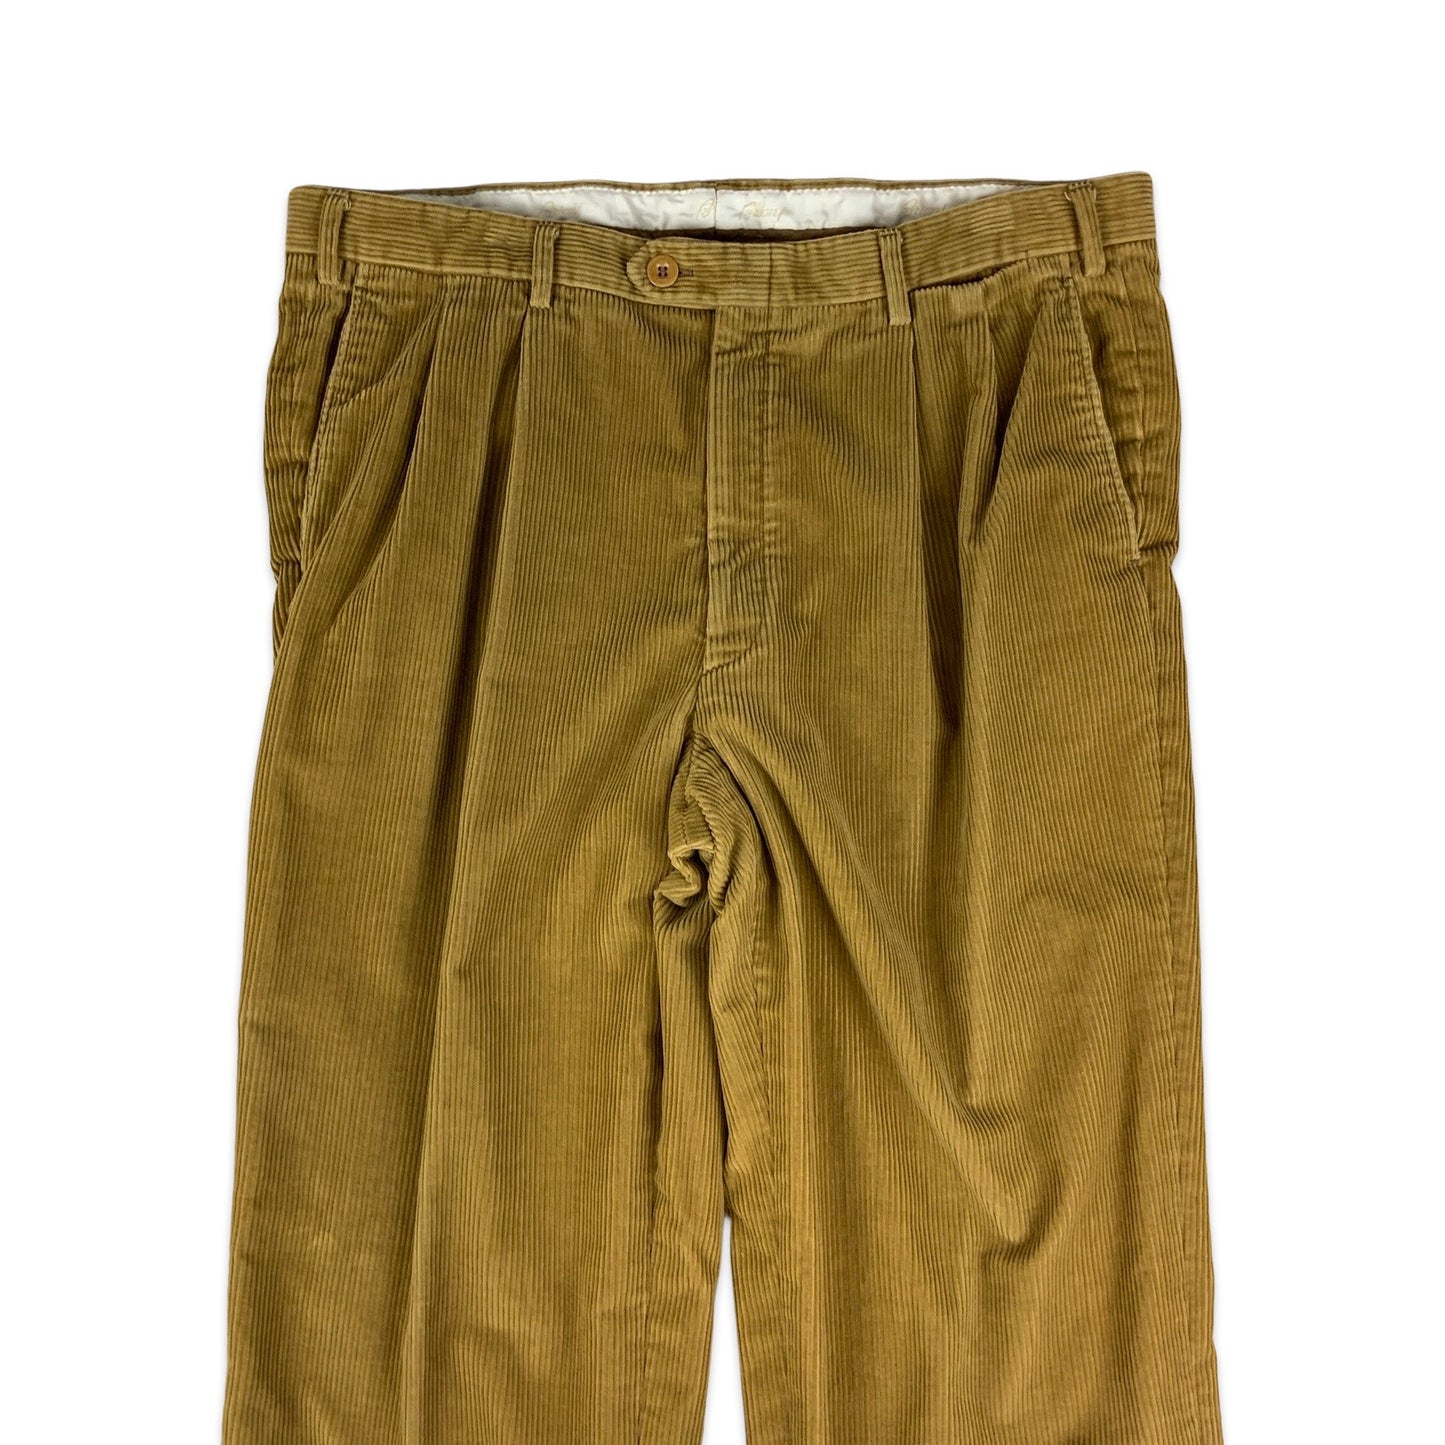 Vintage Beige Pleated Corduroy Trousers 37W 28L